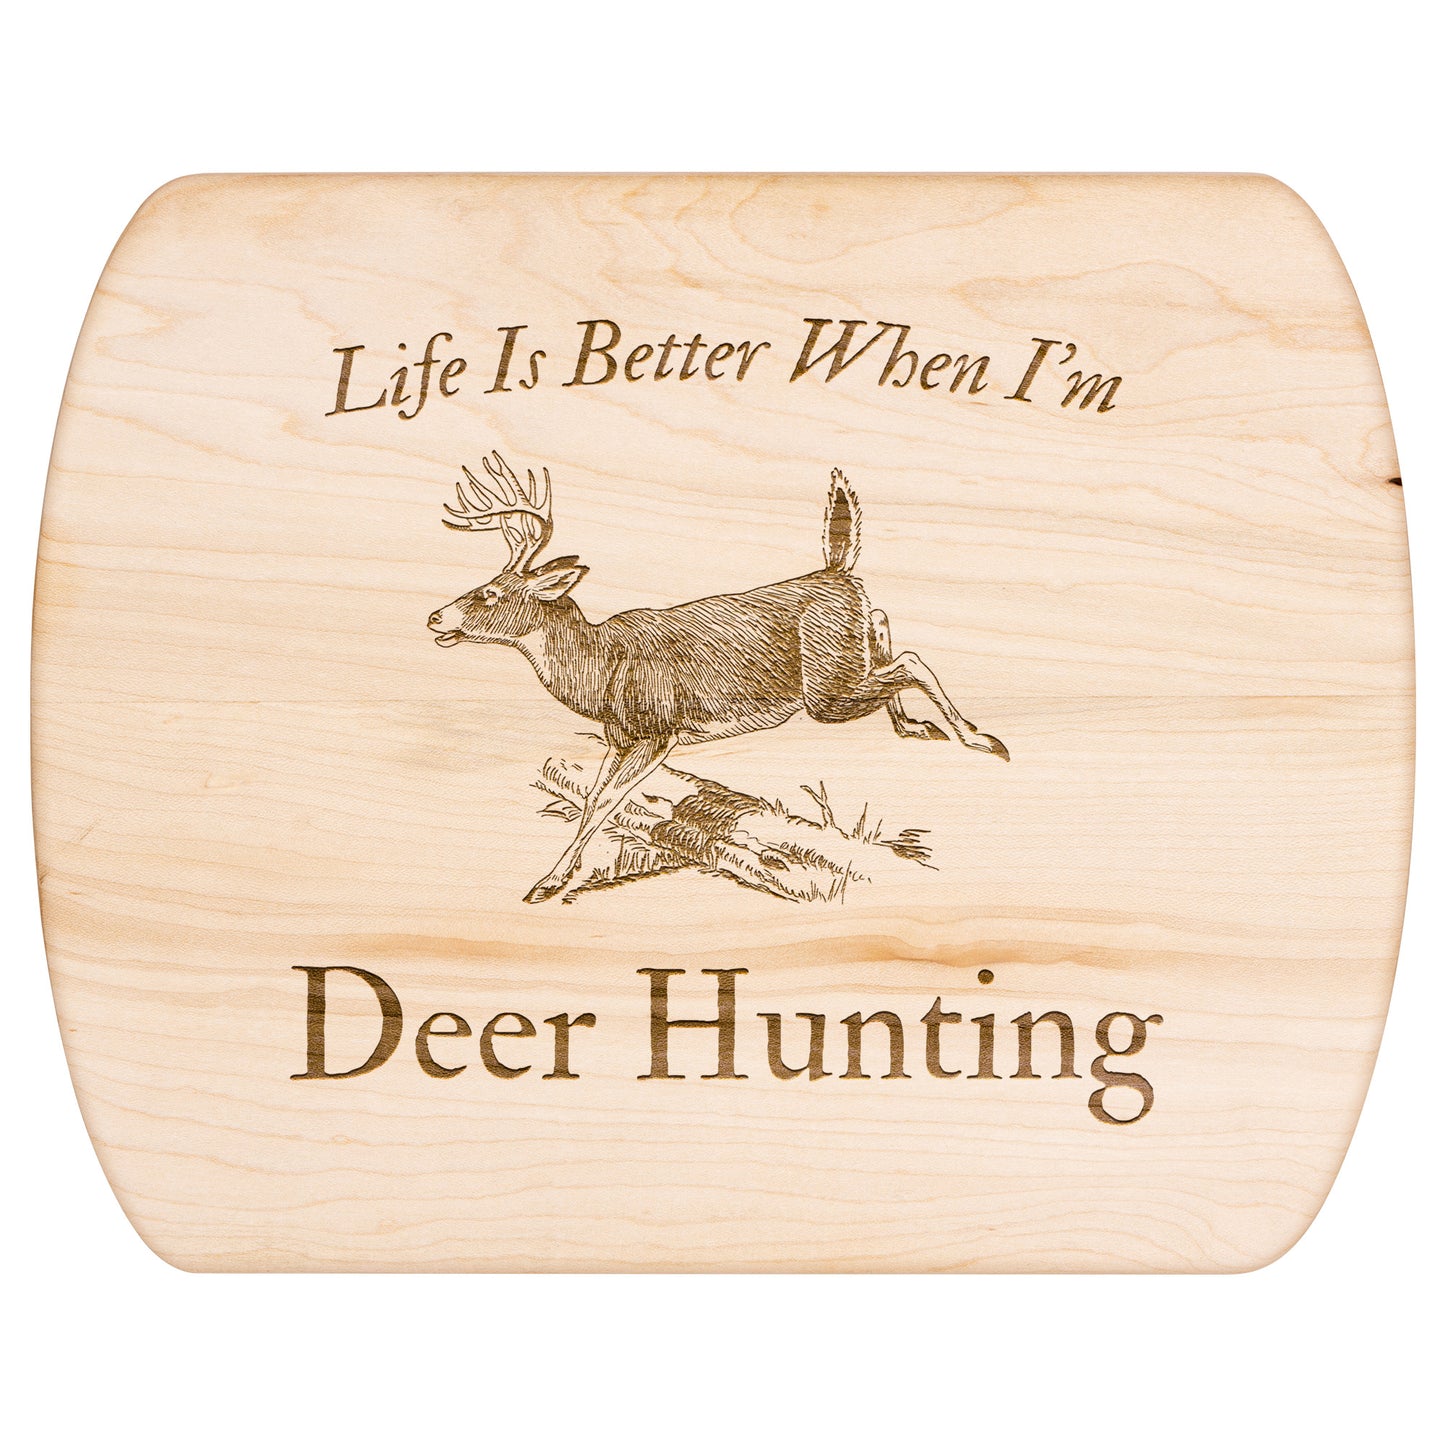 Gift idea: engraved hunting scene on hardwood cutting board.